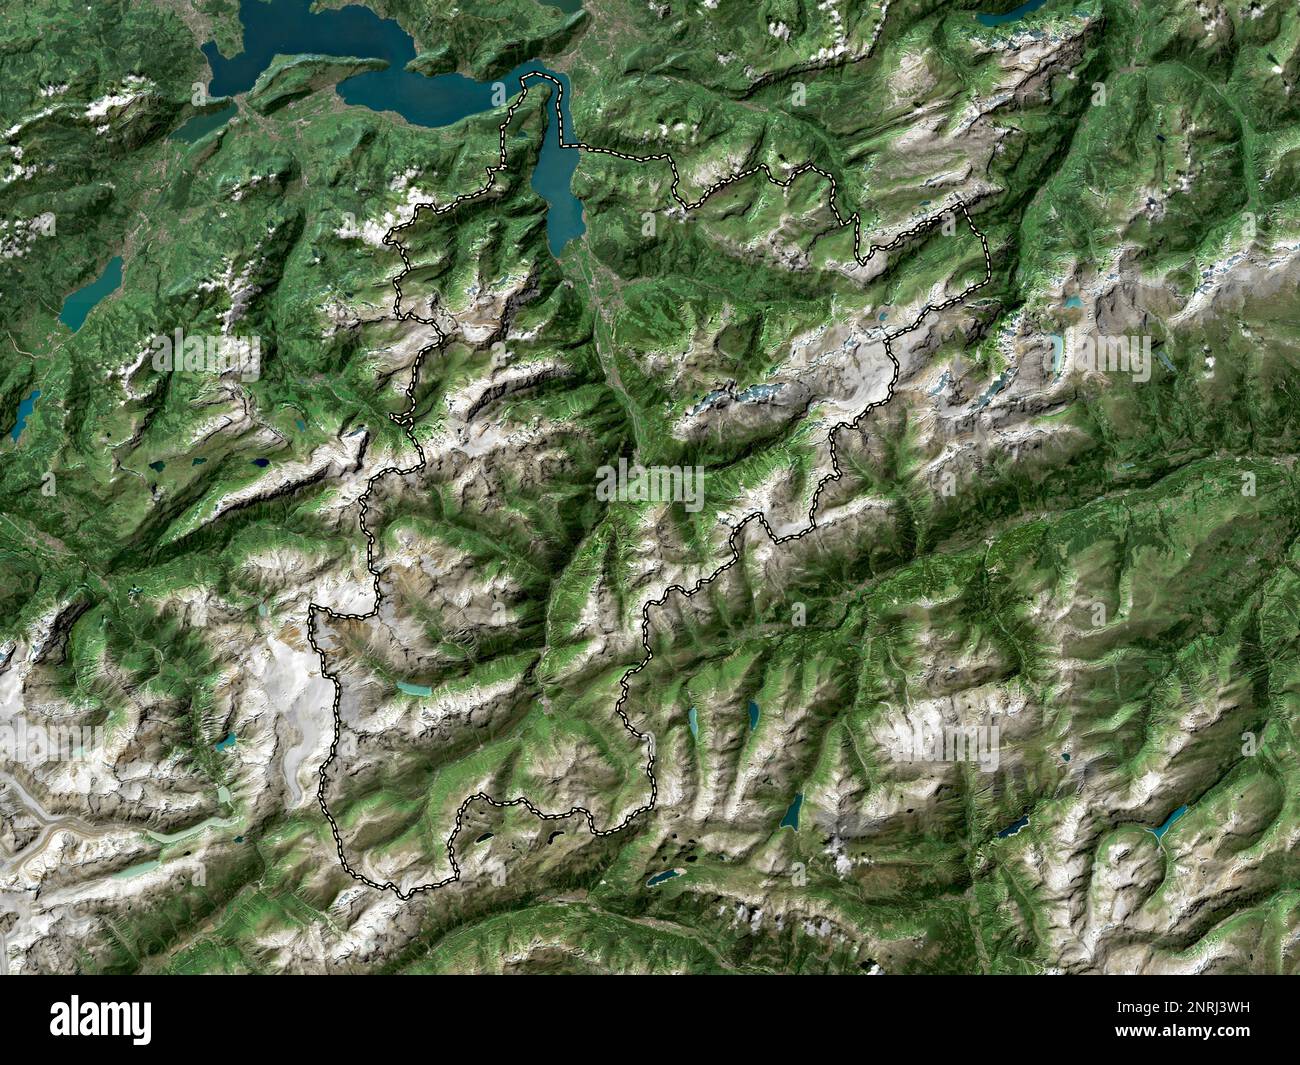 Uri, canton of Switzerland. Low resolution satellite map Stock Photo